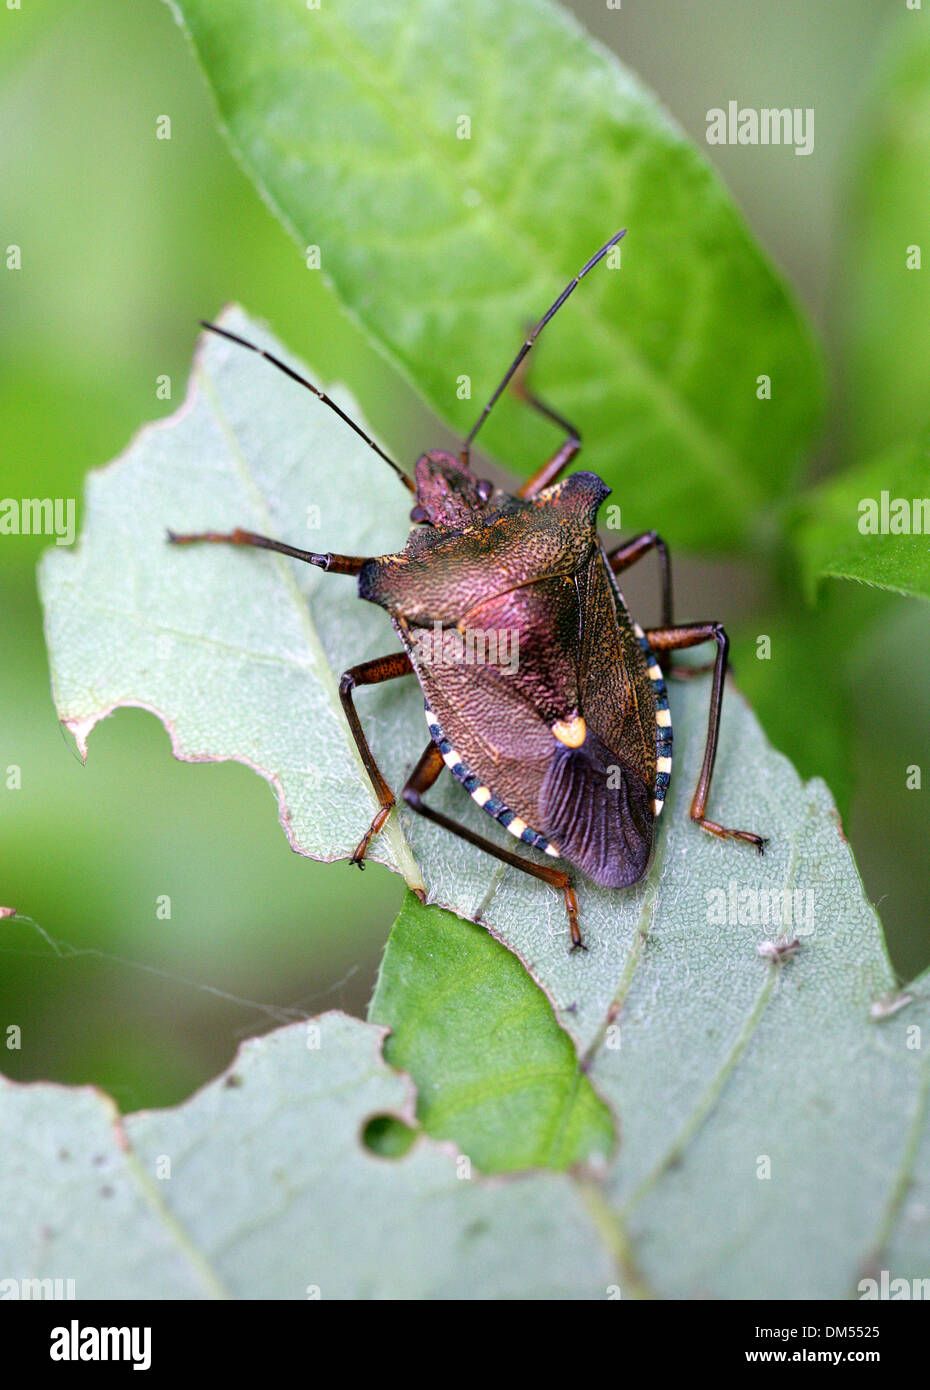 Wald-Shieldbug, Pentatoma Art, Pentatomidae, Hemiptera. Erwachsenen Insekt. Stockfoto